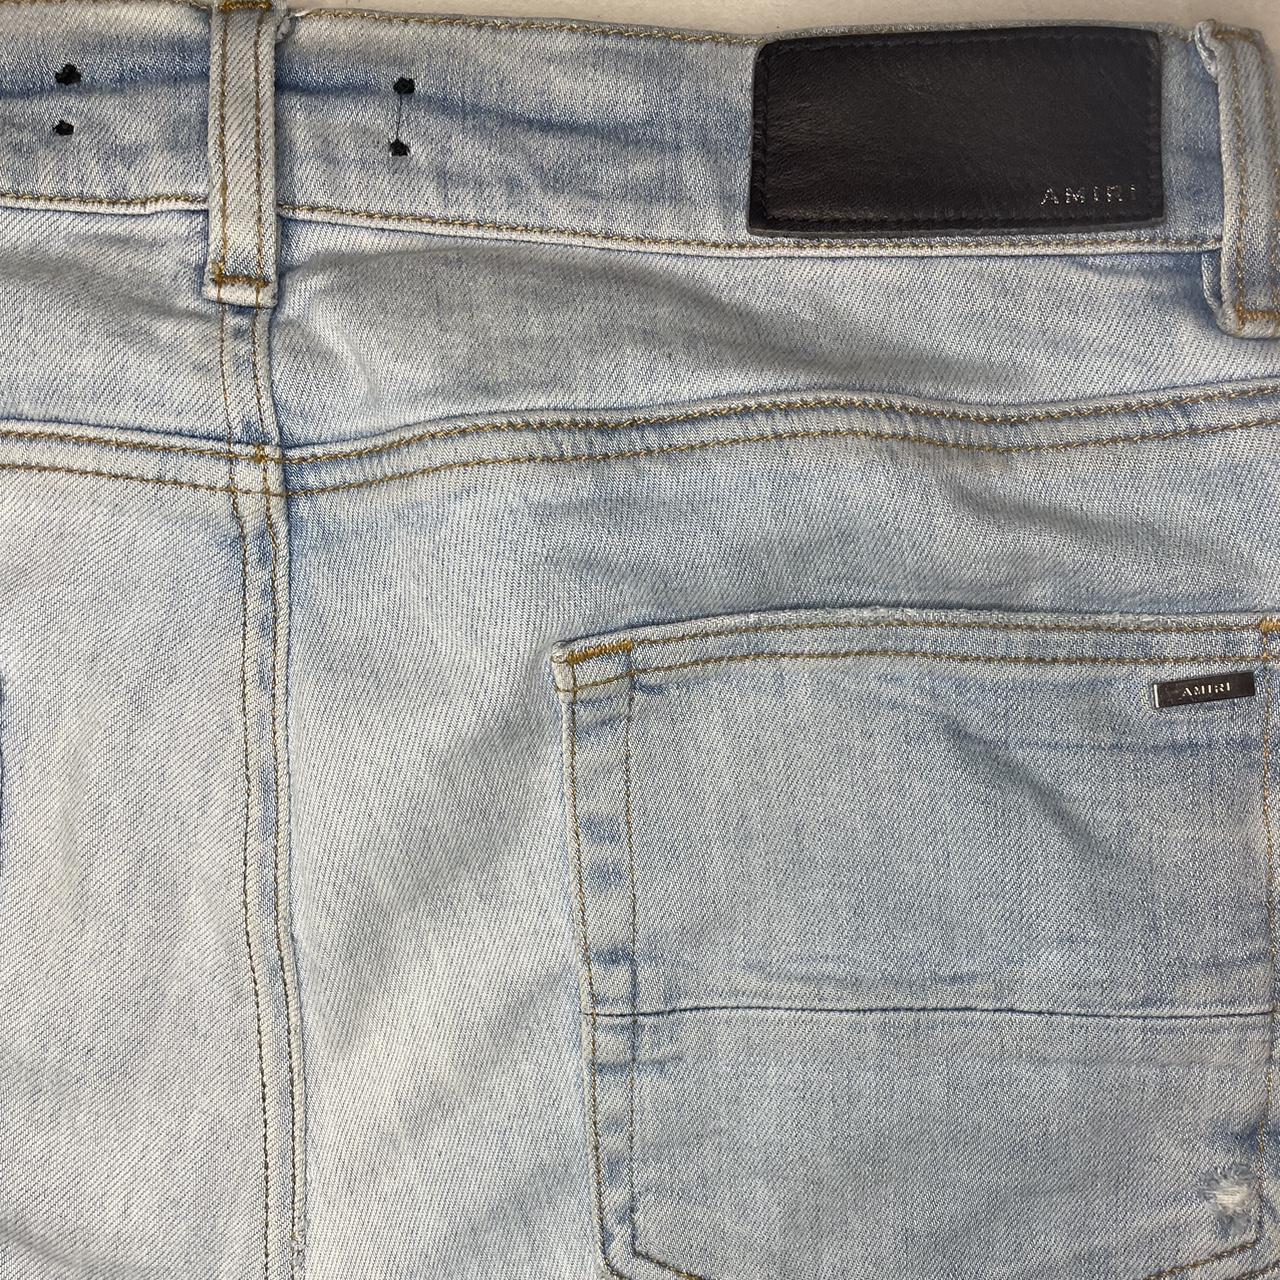 Amiri MX1 Leather Patch Skinny Classic Jeans - Size... - Depop